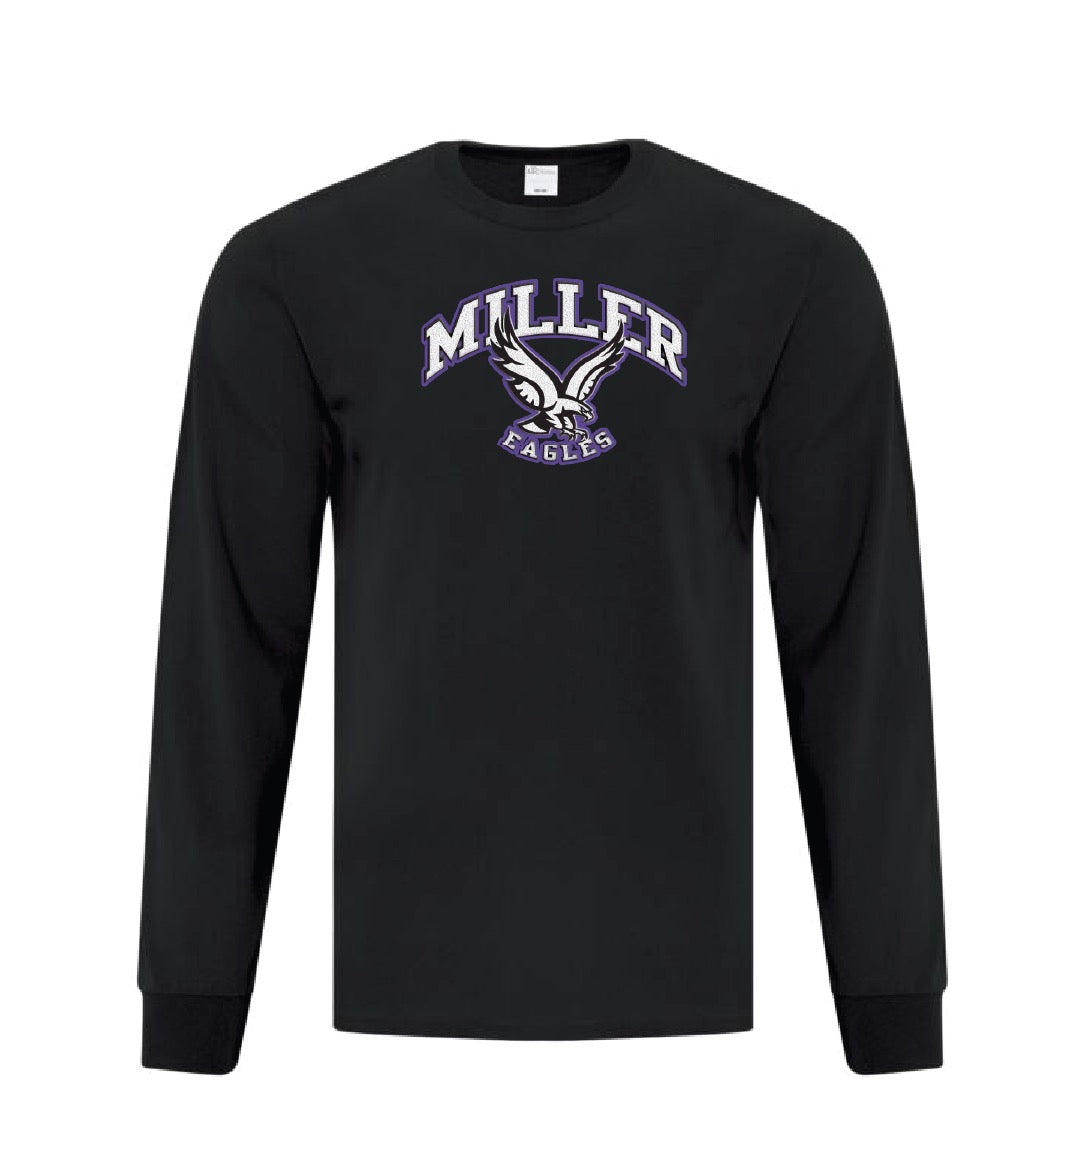 Adult "Miller Spirit Wear" Long Sleeve